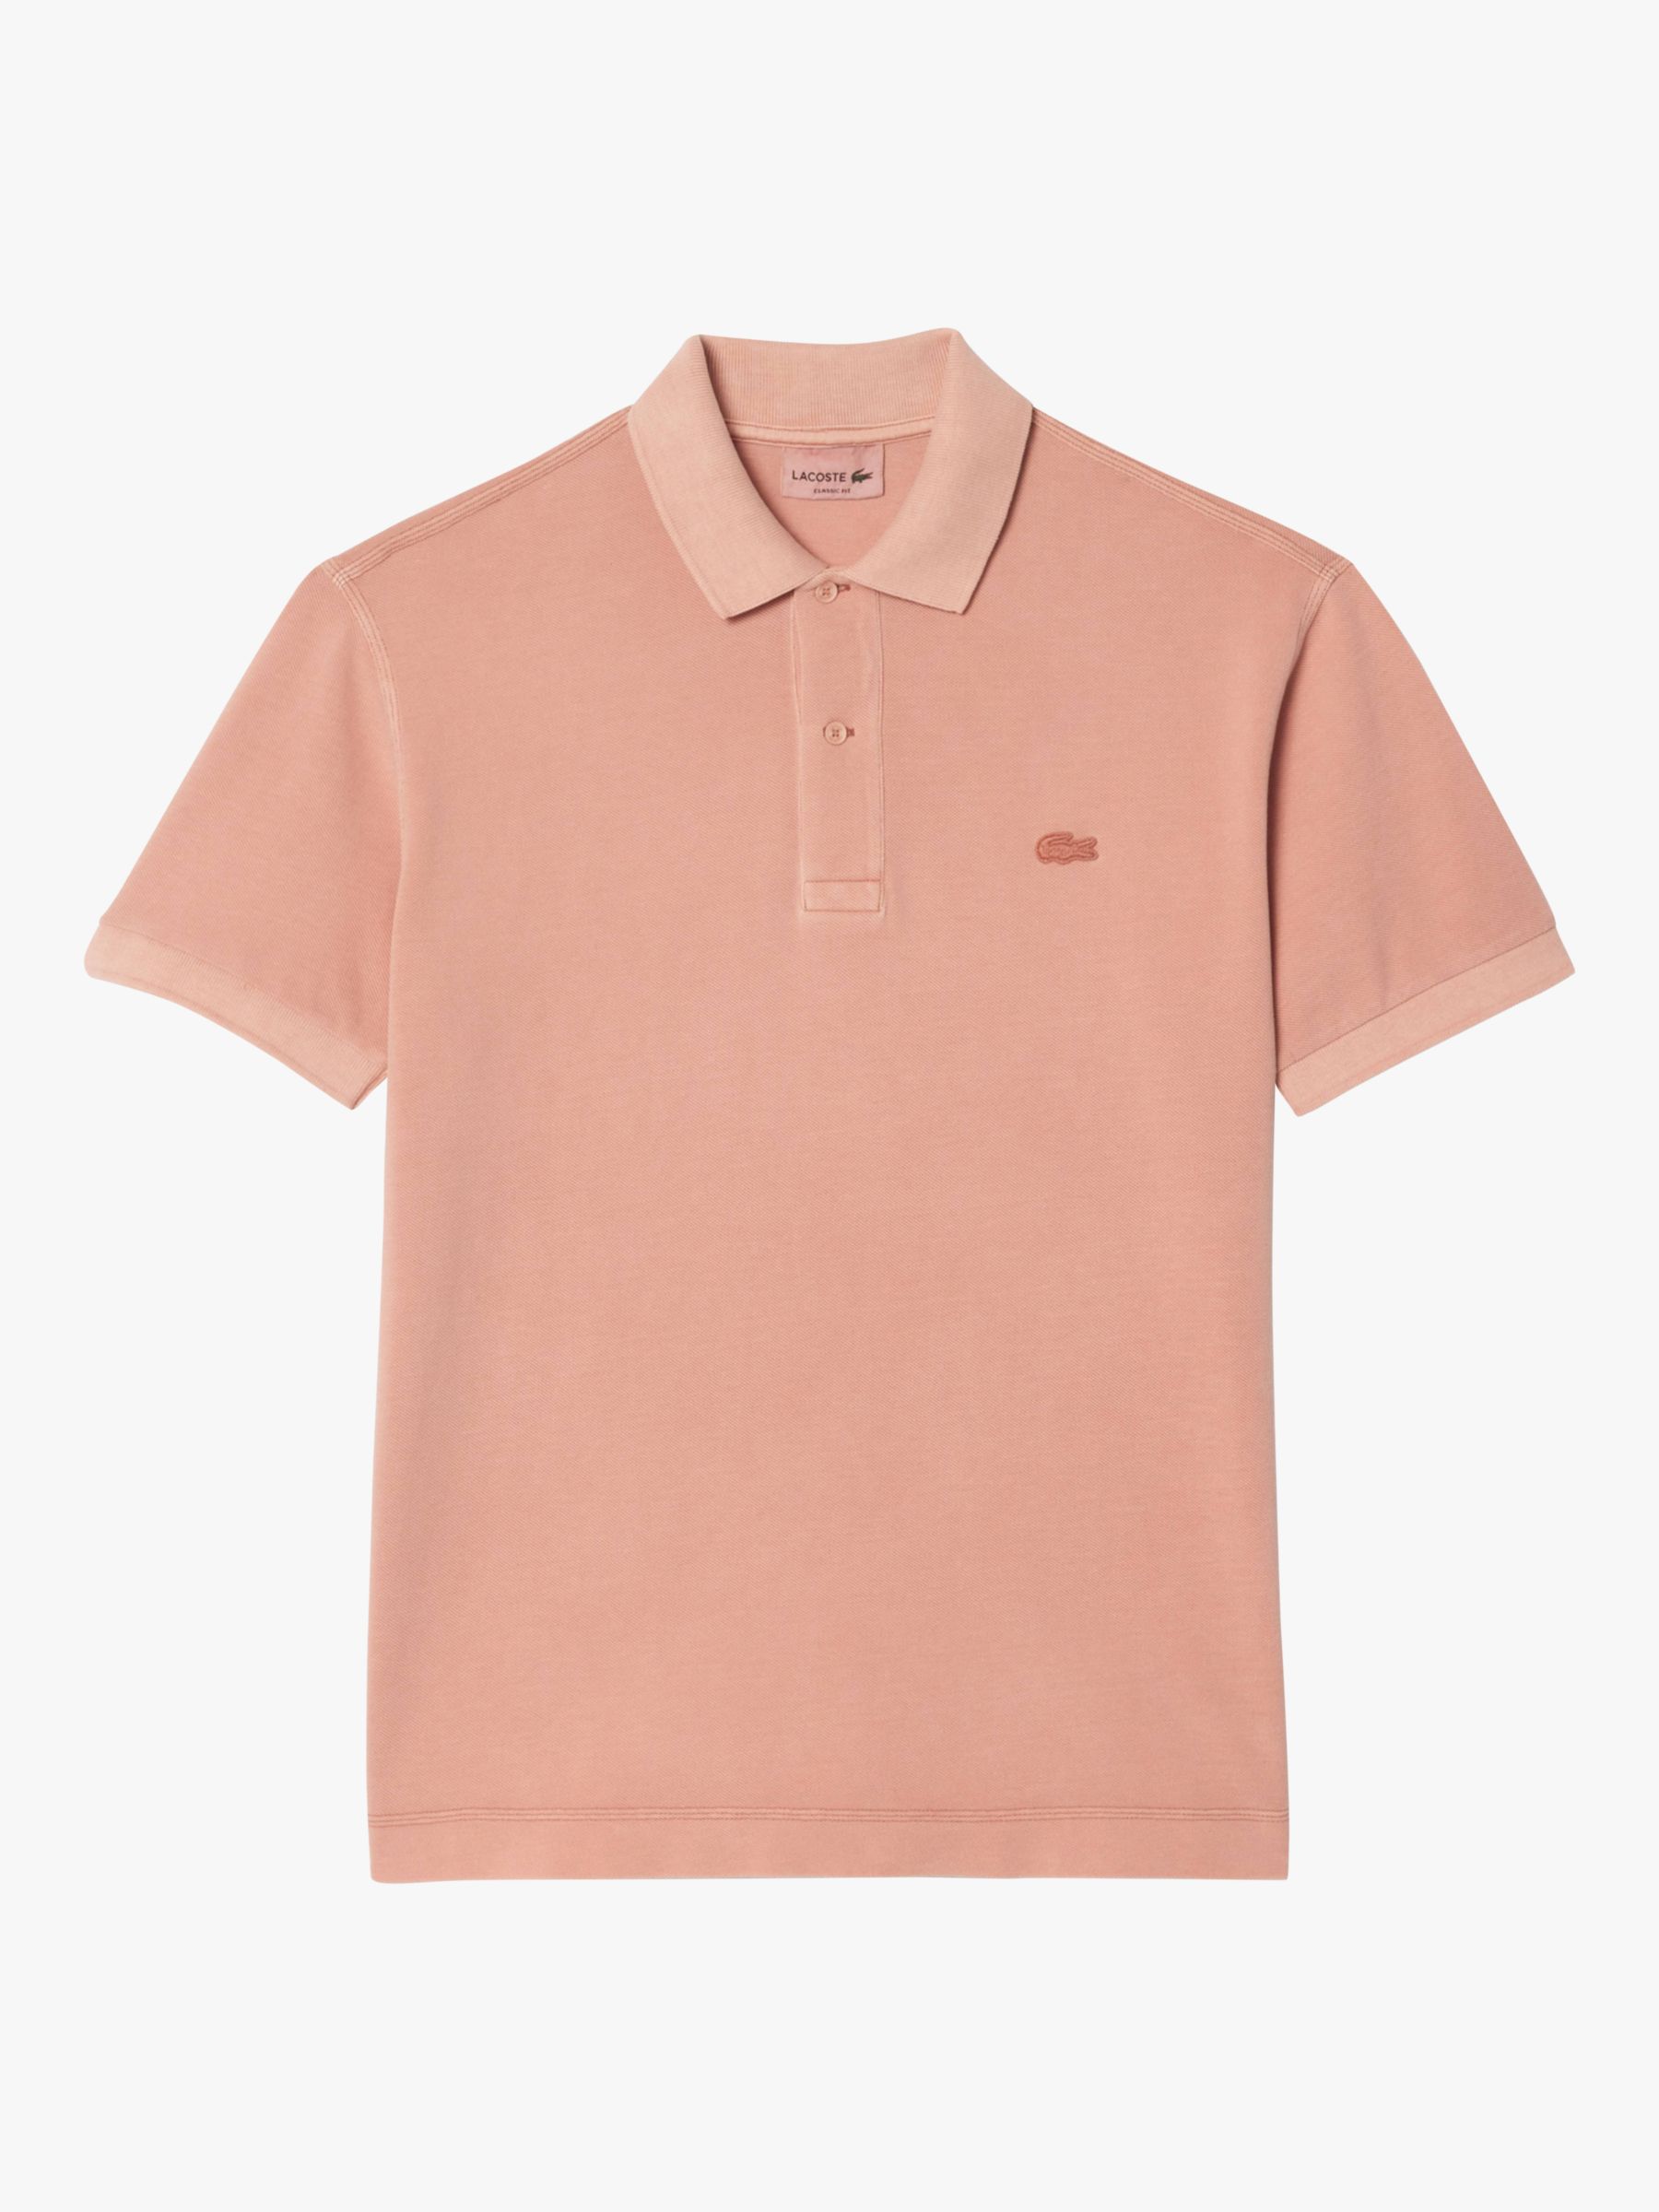 Lacoste Classic Fit Cotton Piqué Short Sleeve Polo Shirt, Eco Pink, S